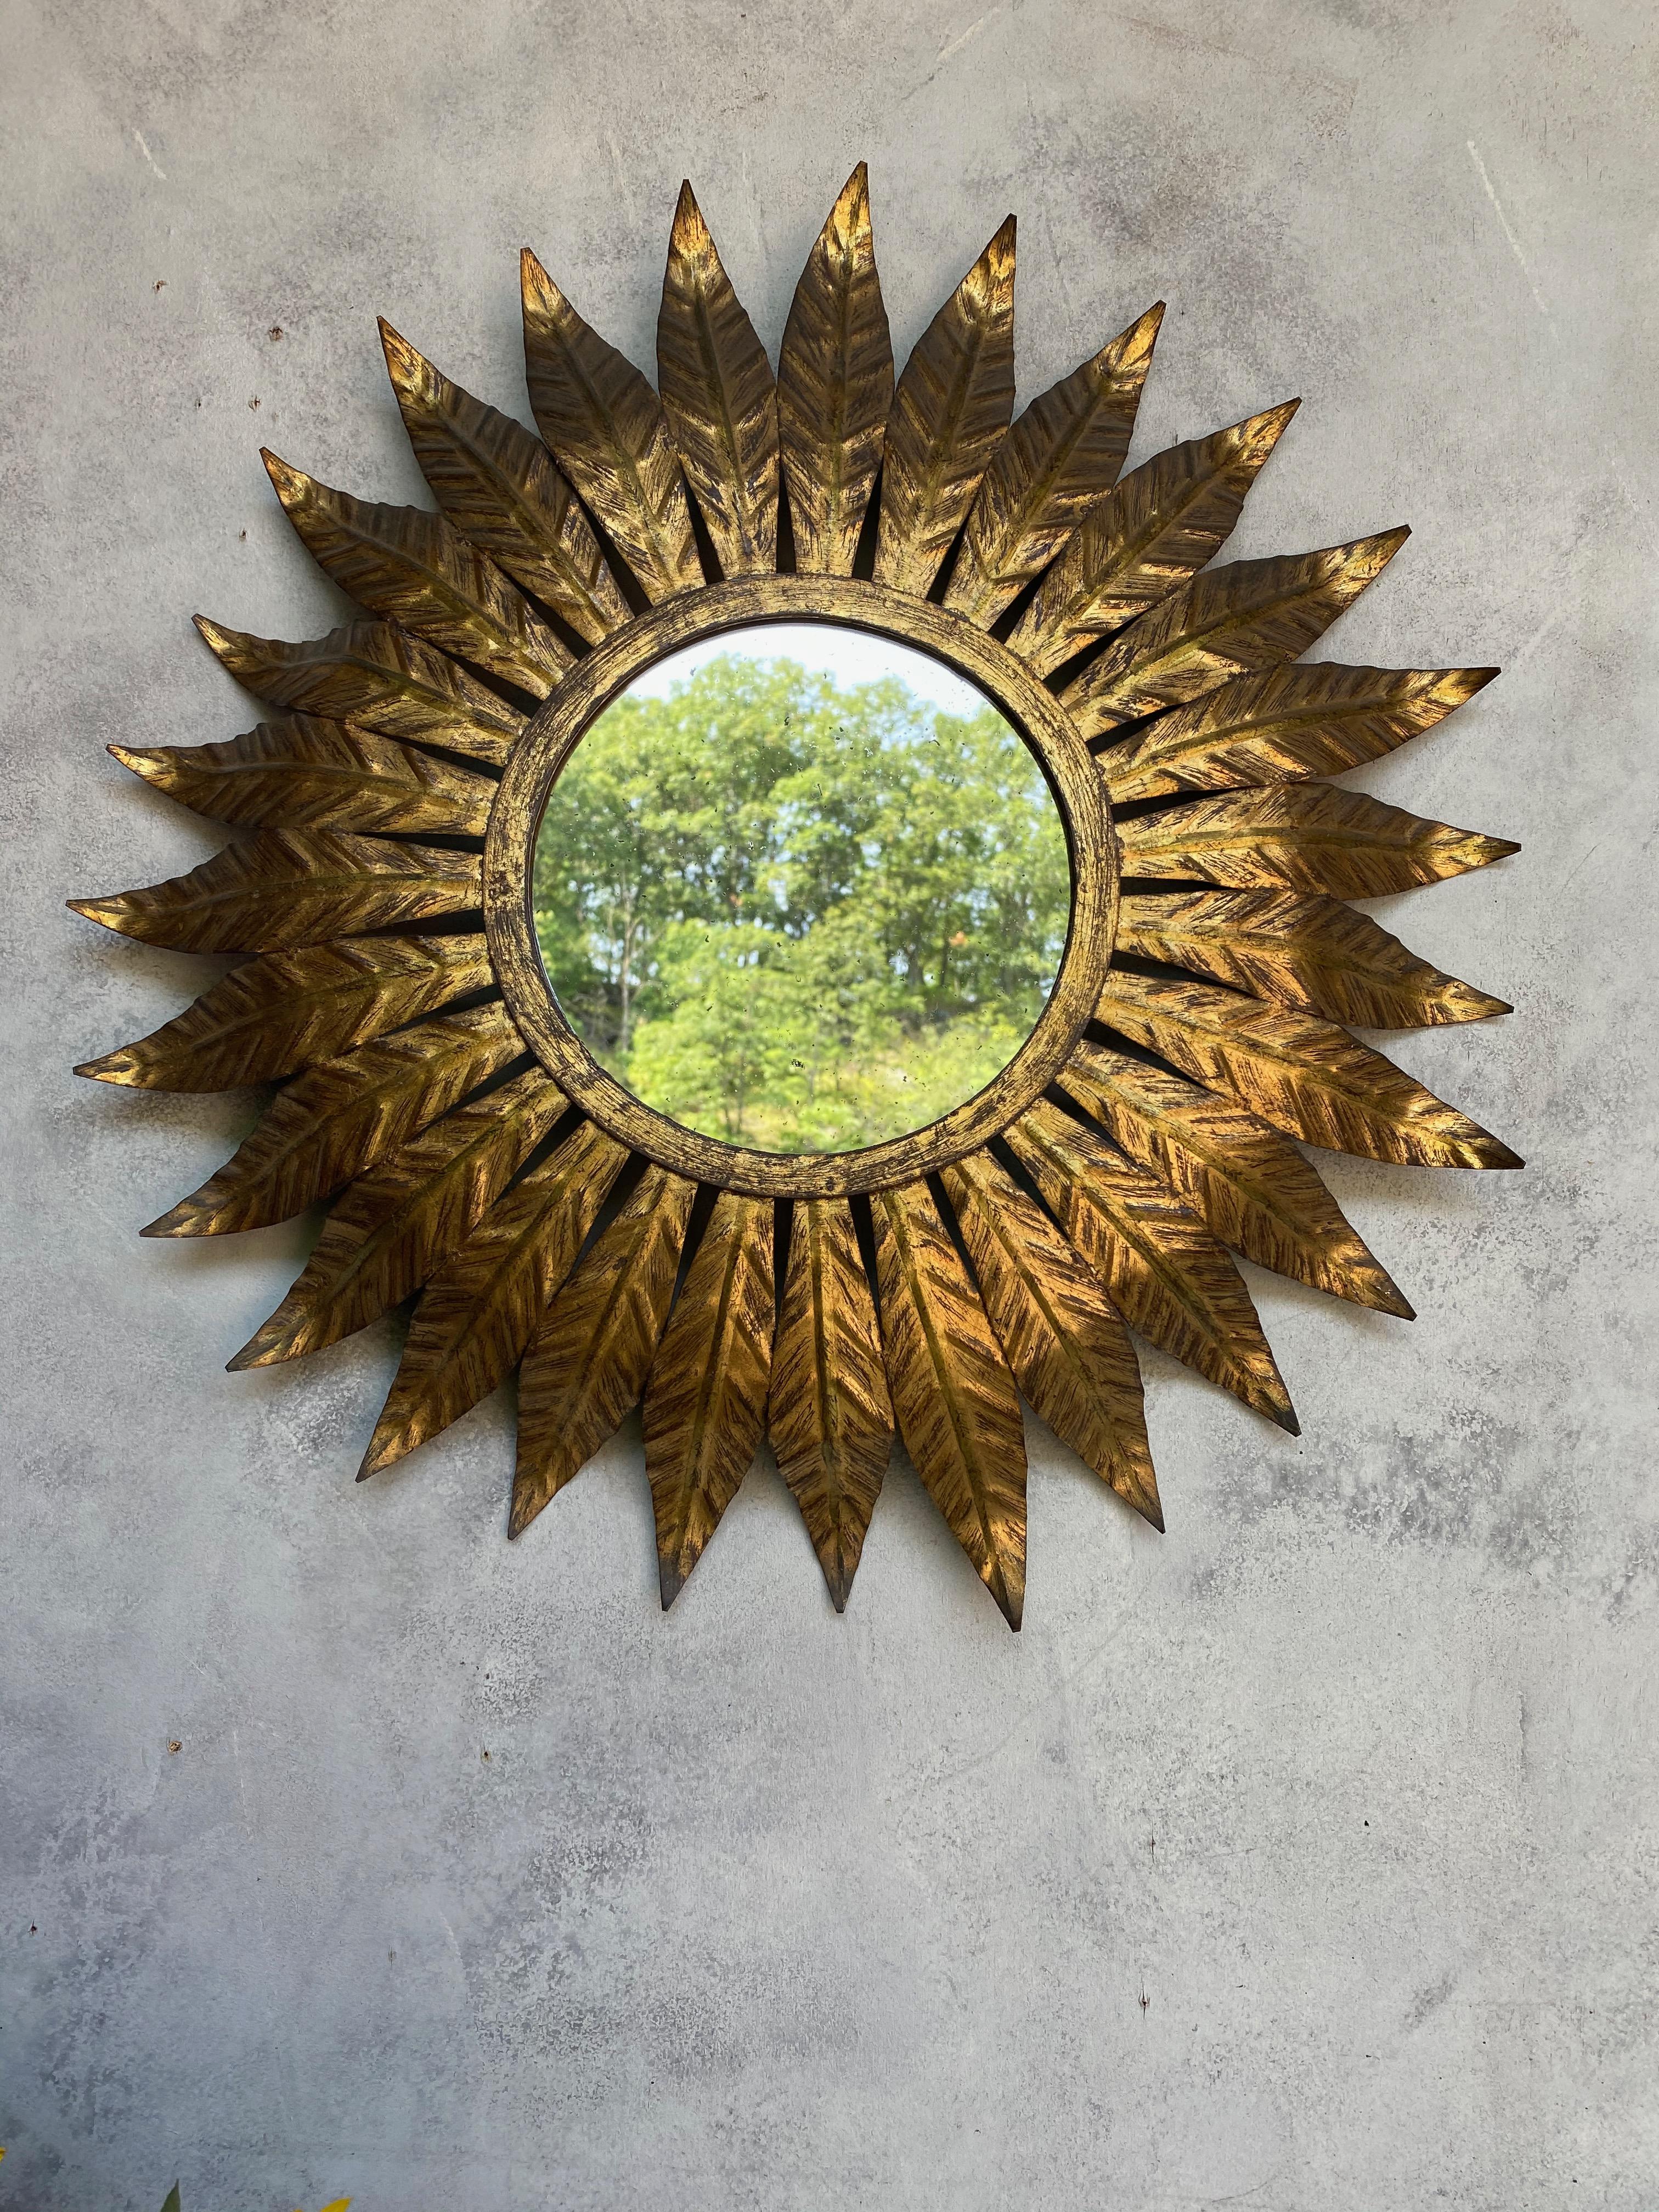 Round Spanish Gilt Metal Sunburst Mirror With Large Radiating Leaves For Sale 1